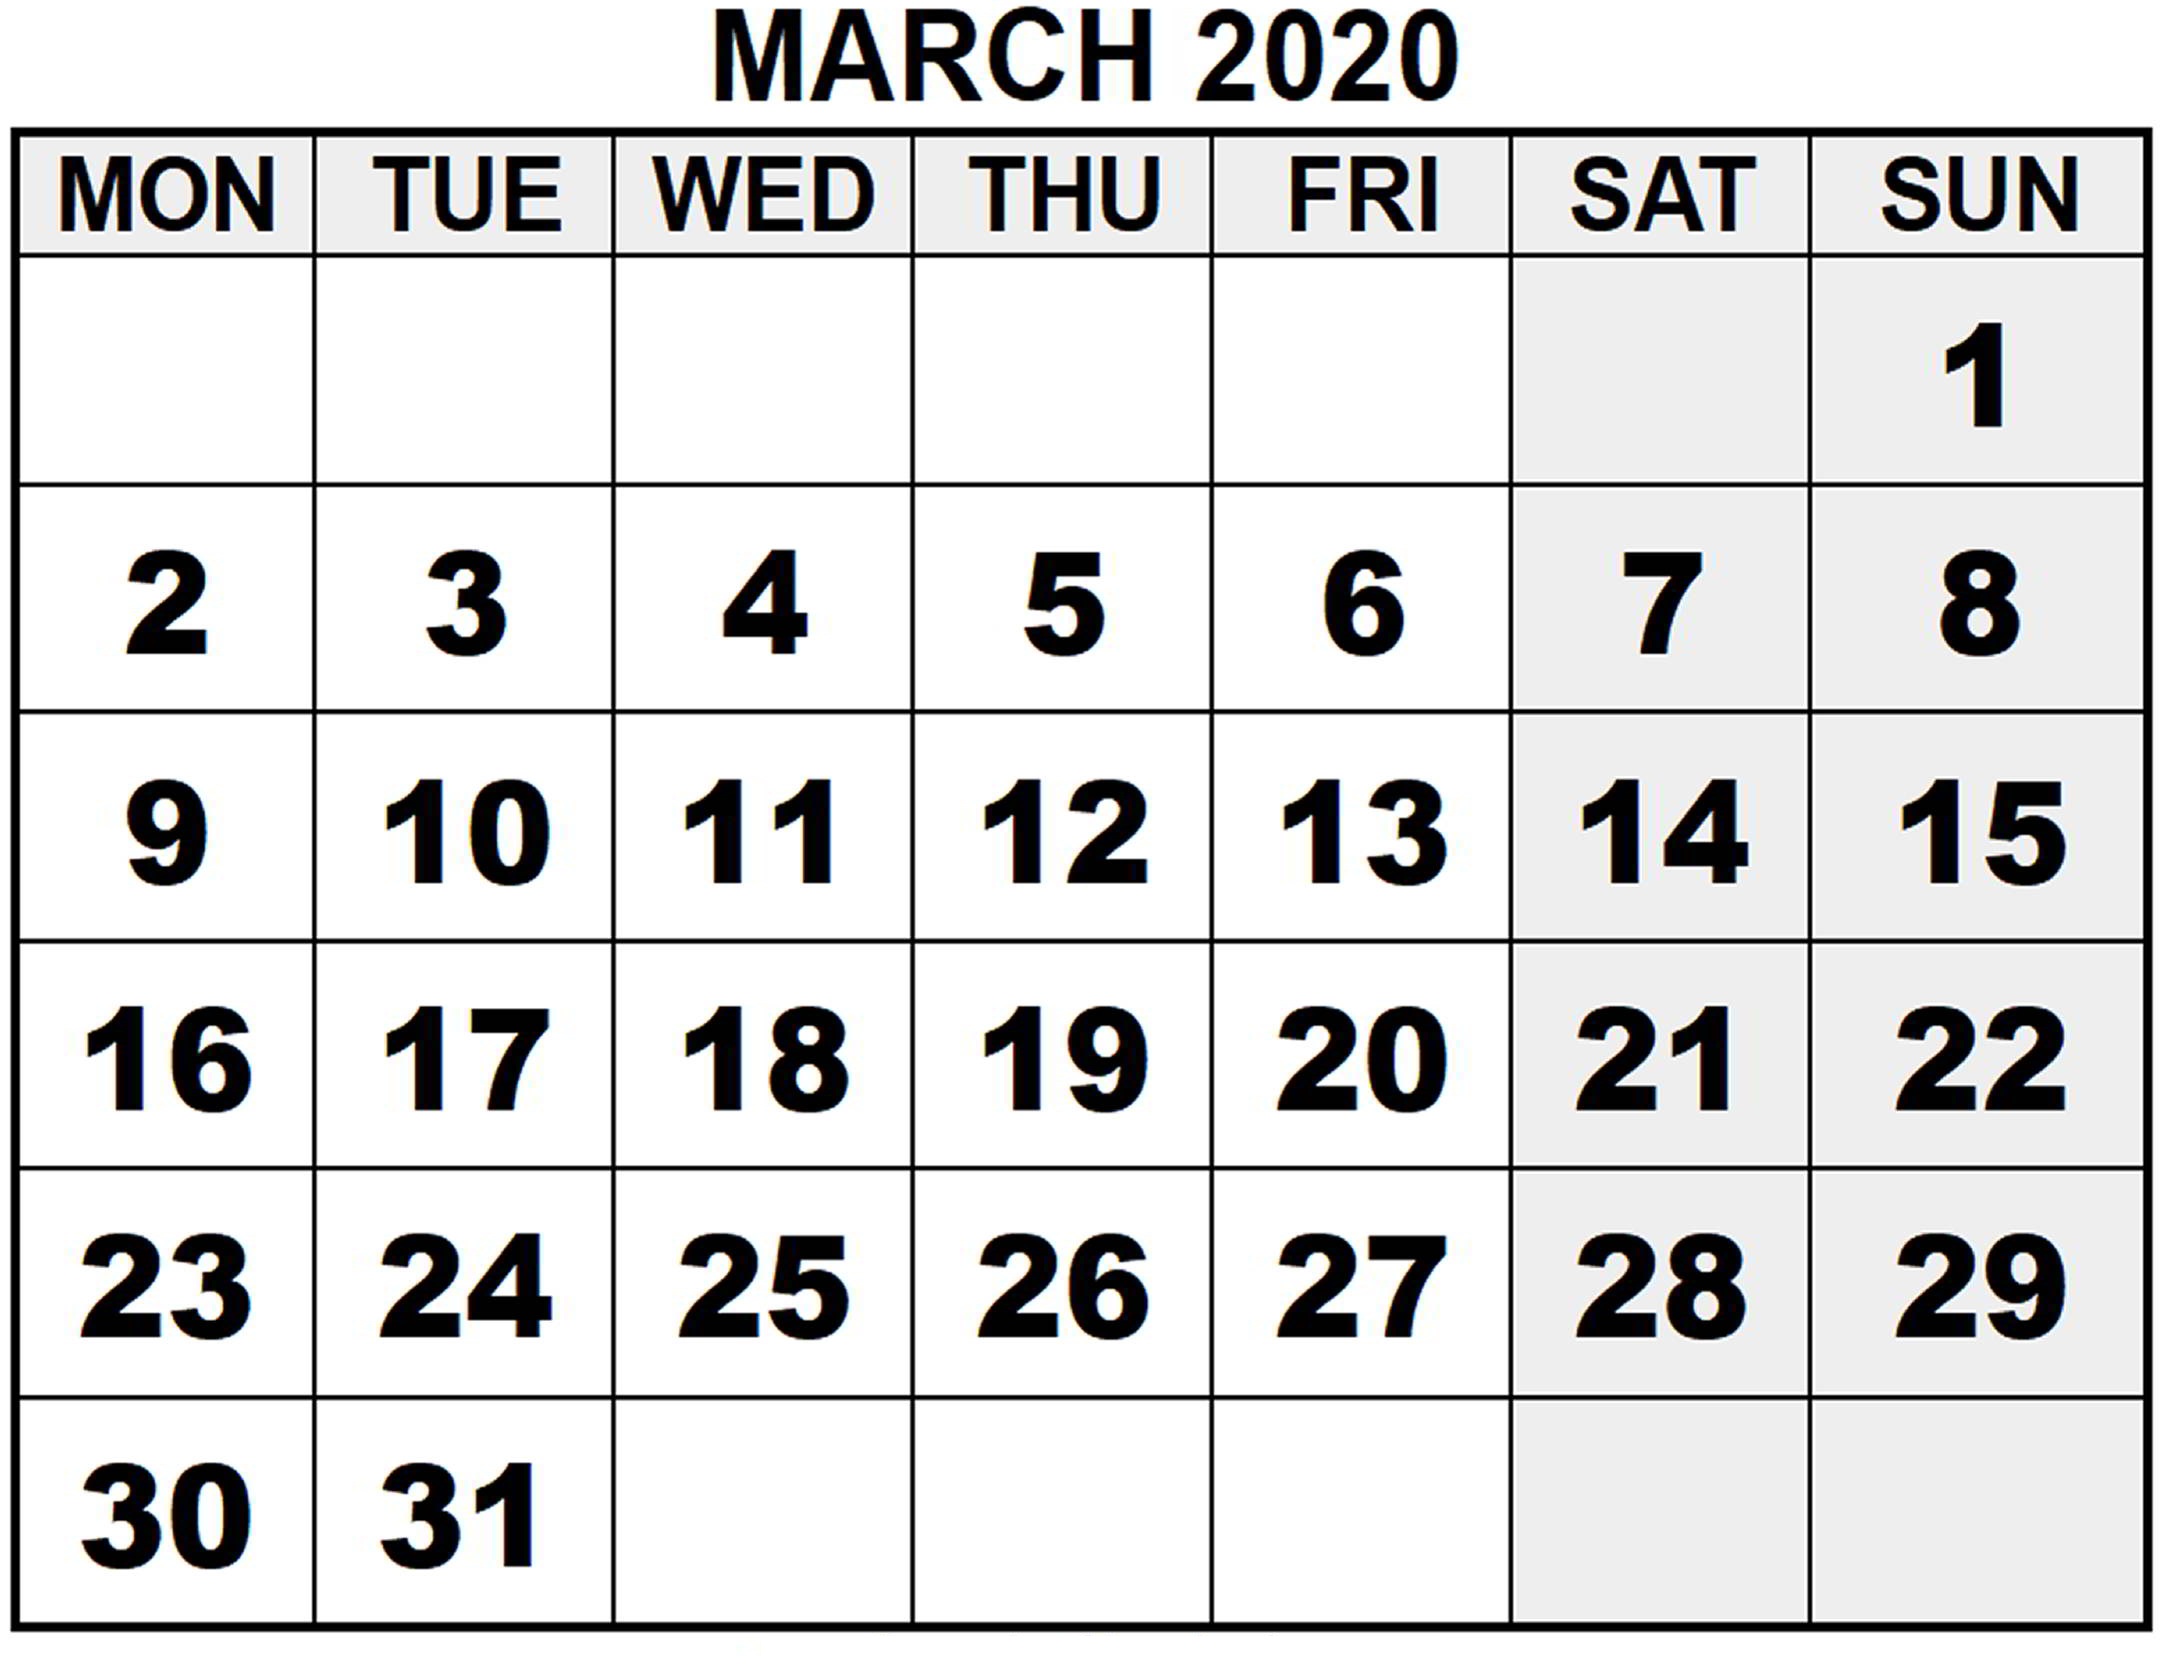 March calendar. Календарь март. Март 2020. Календарик 2020 март. Календарь на март сетка.